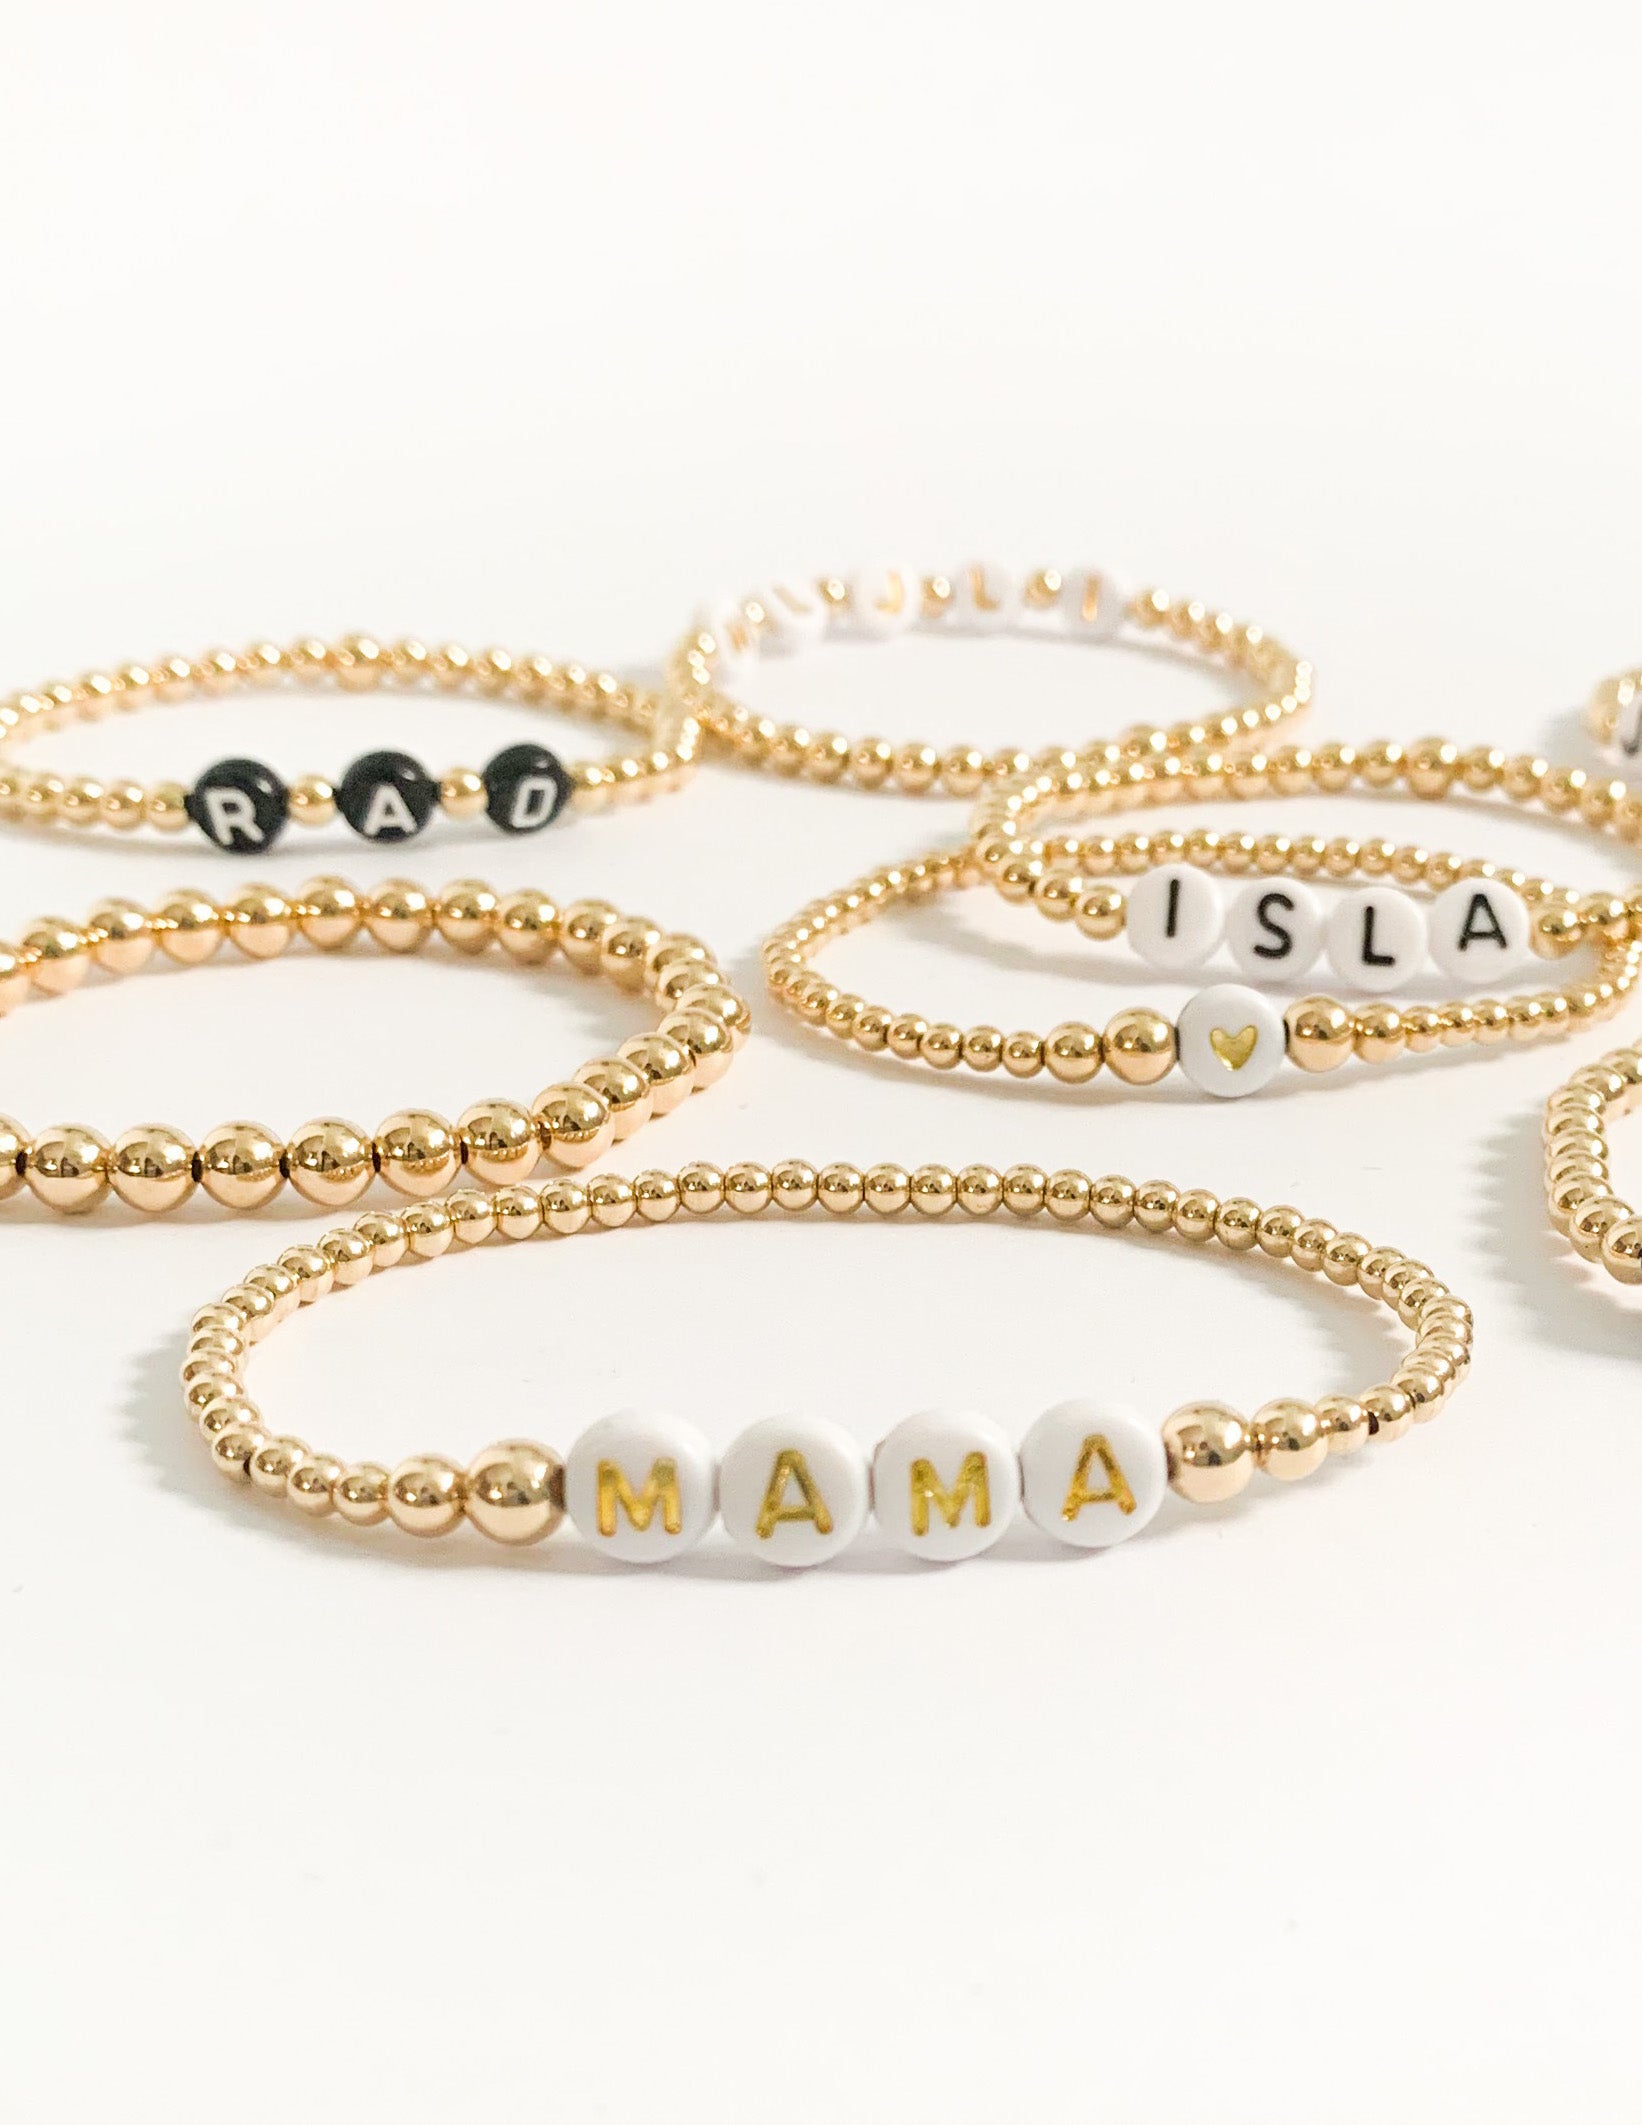 Mama bracelet in rose gold 14k adorned with white zircon stones BR11300144